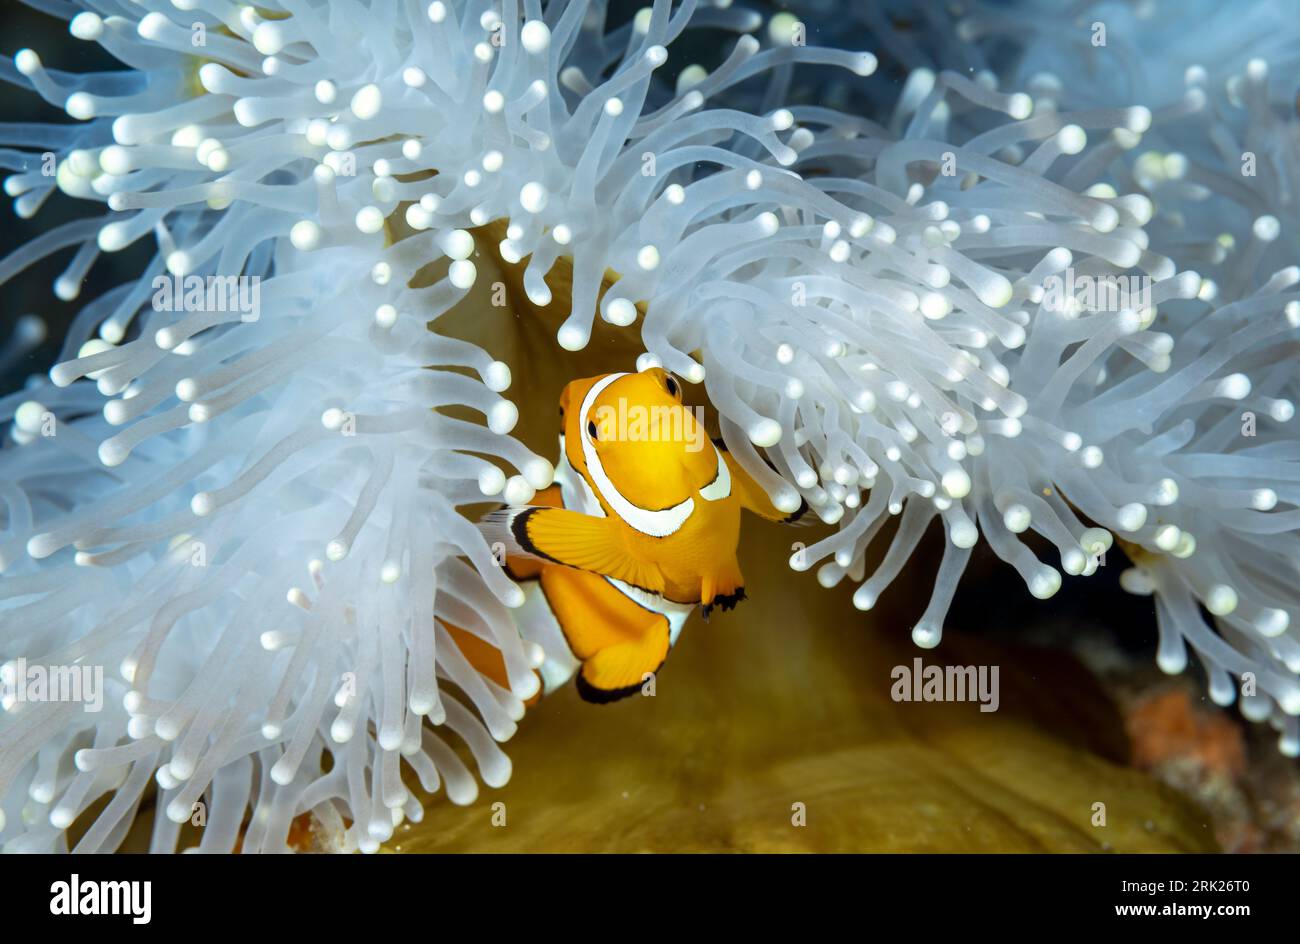 False clown anemonefish, Amphiprion ocellaris, in a magnificient sea anemone, Heteractis magnifica, Raja Ampat Indonesia Stock Photo